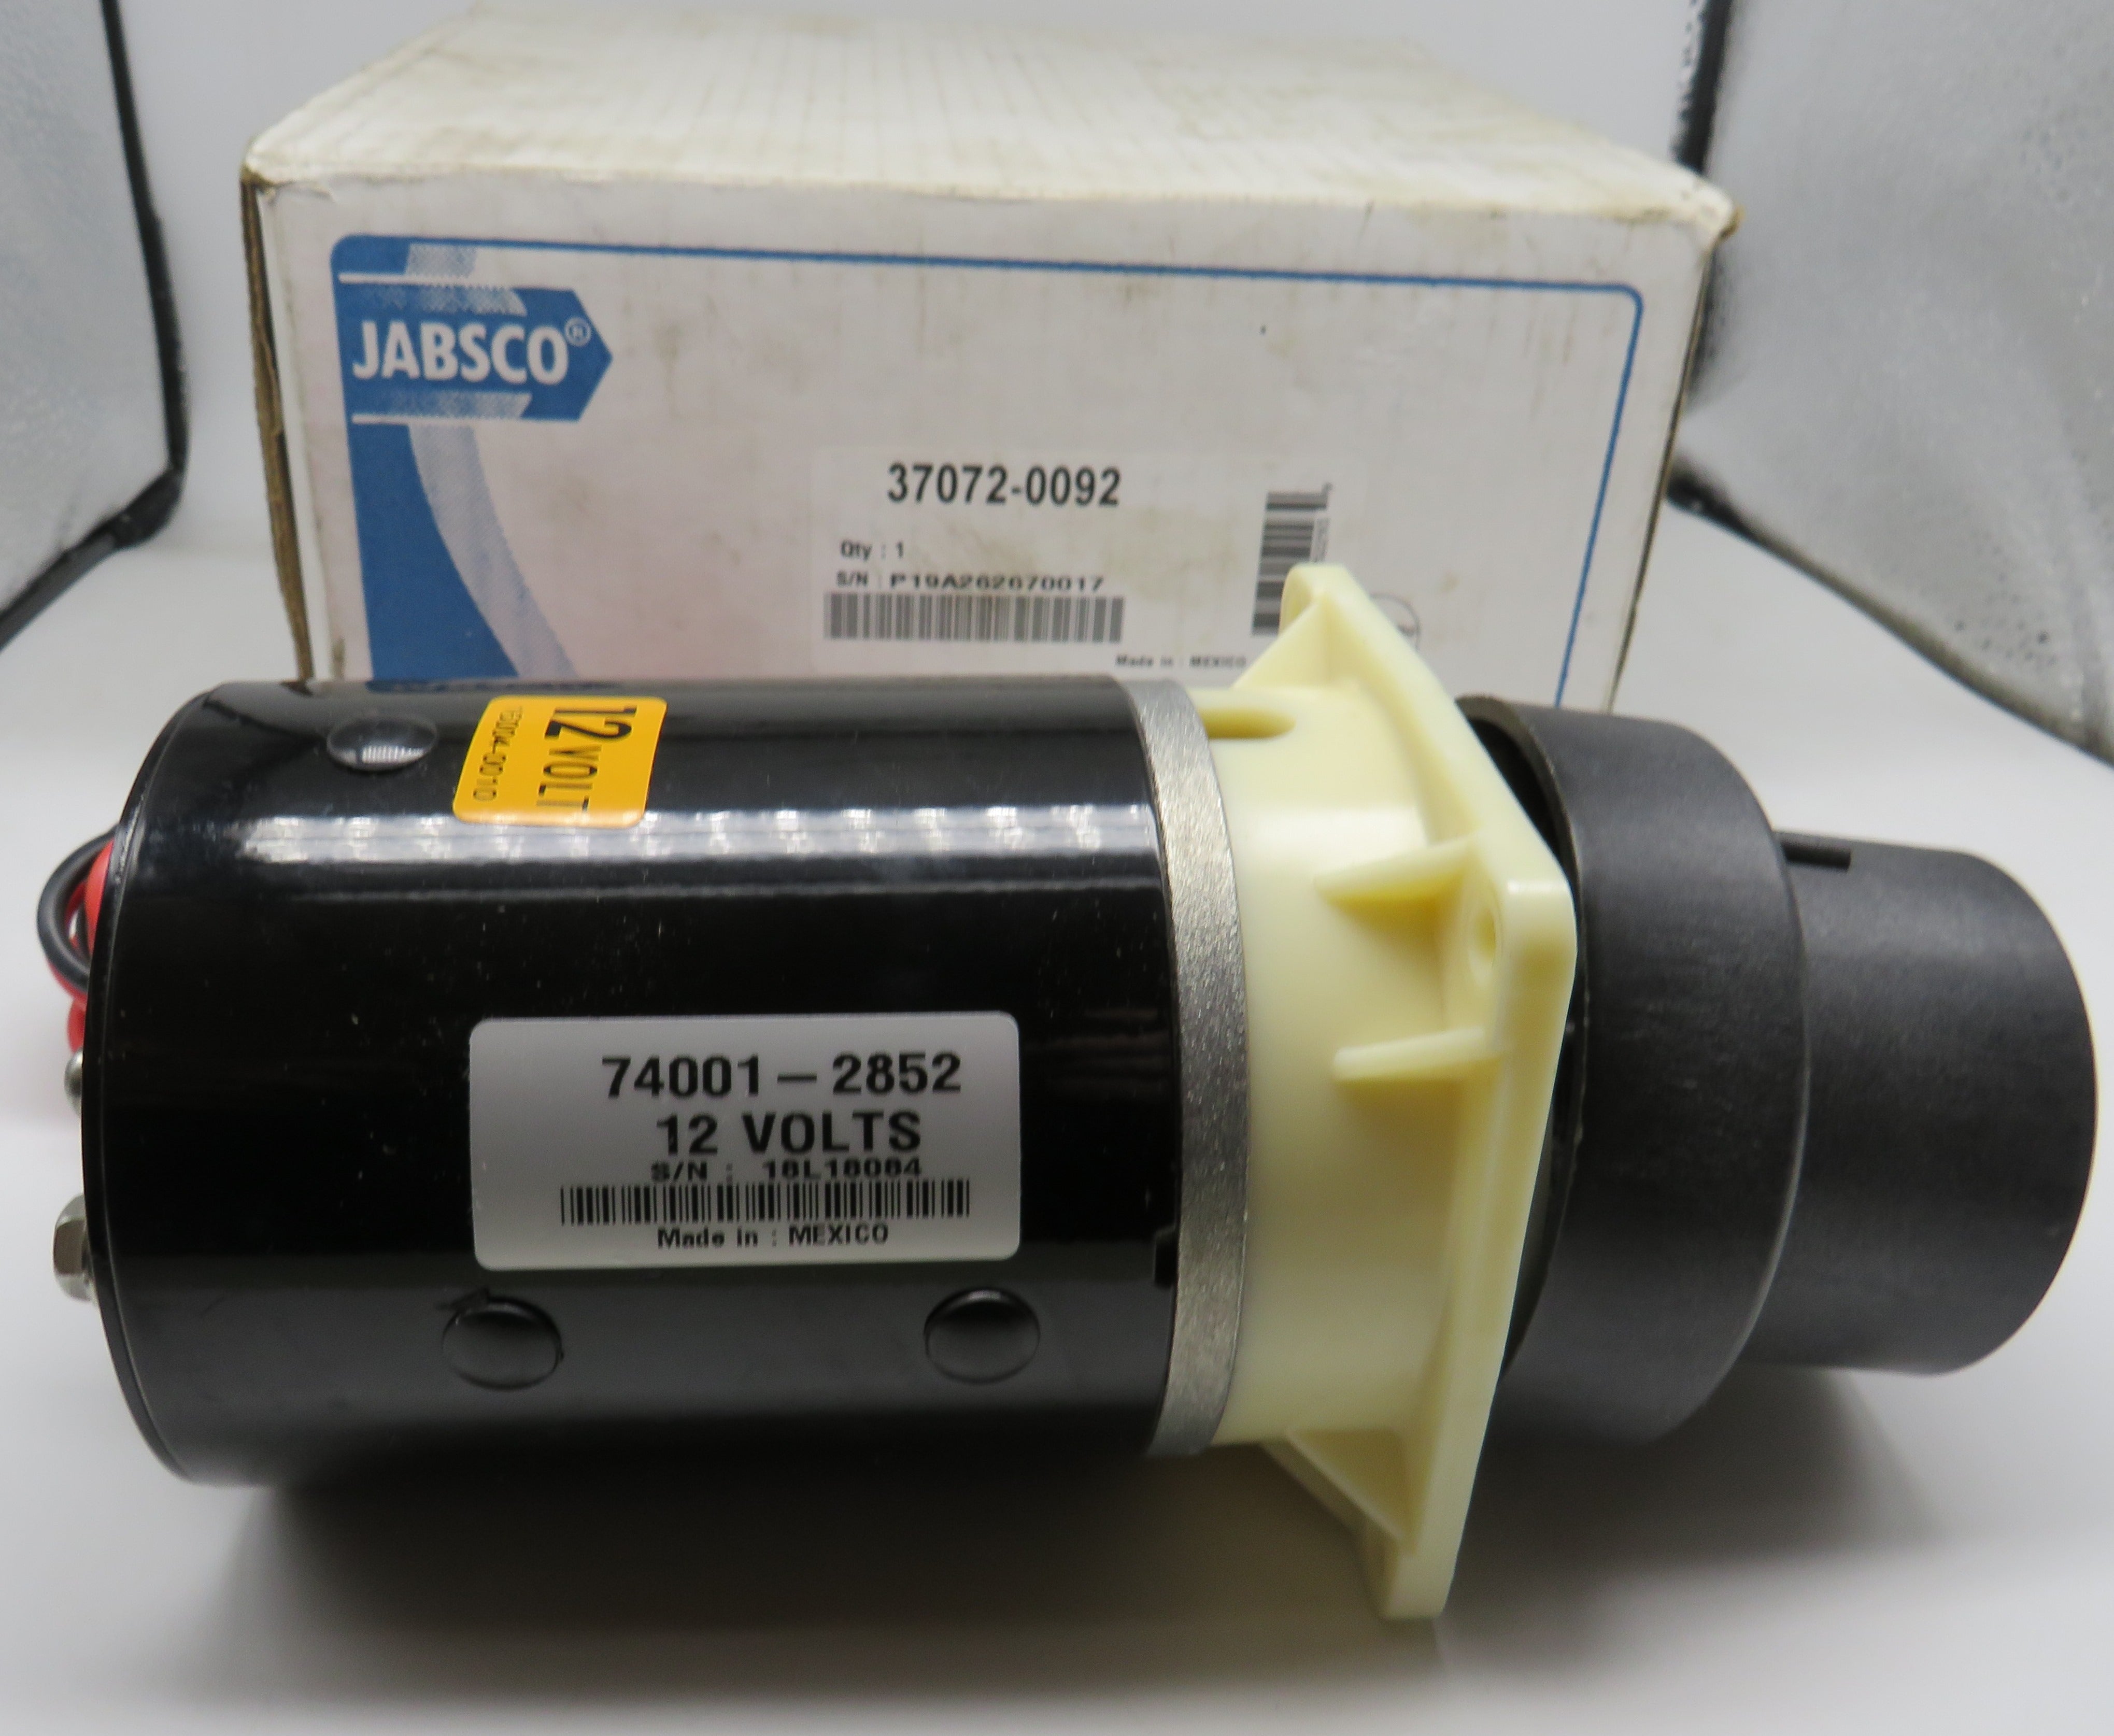 37072-0092 Jabsco Par Macerator Pump Assembly